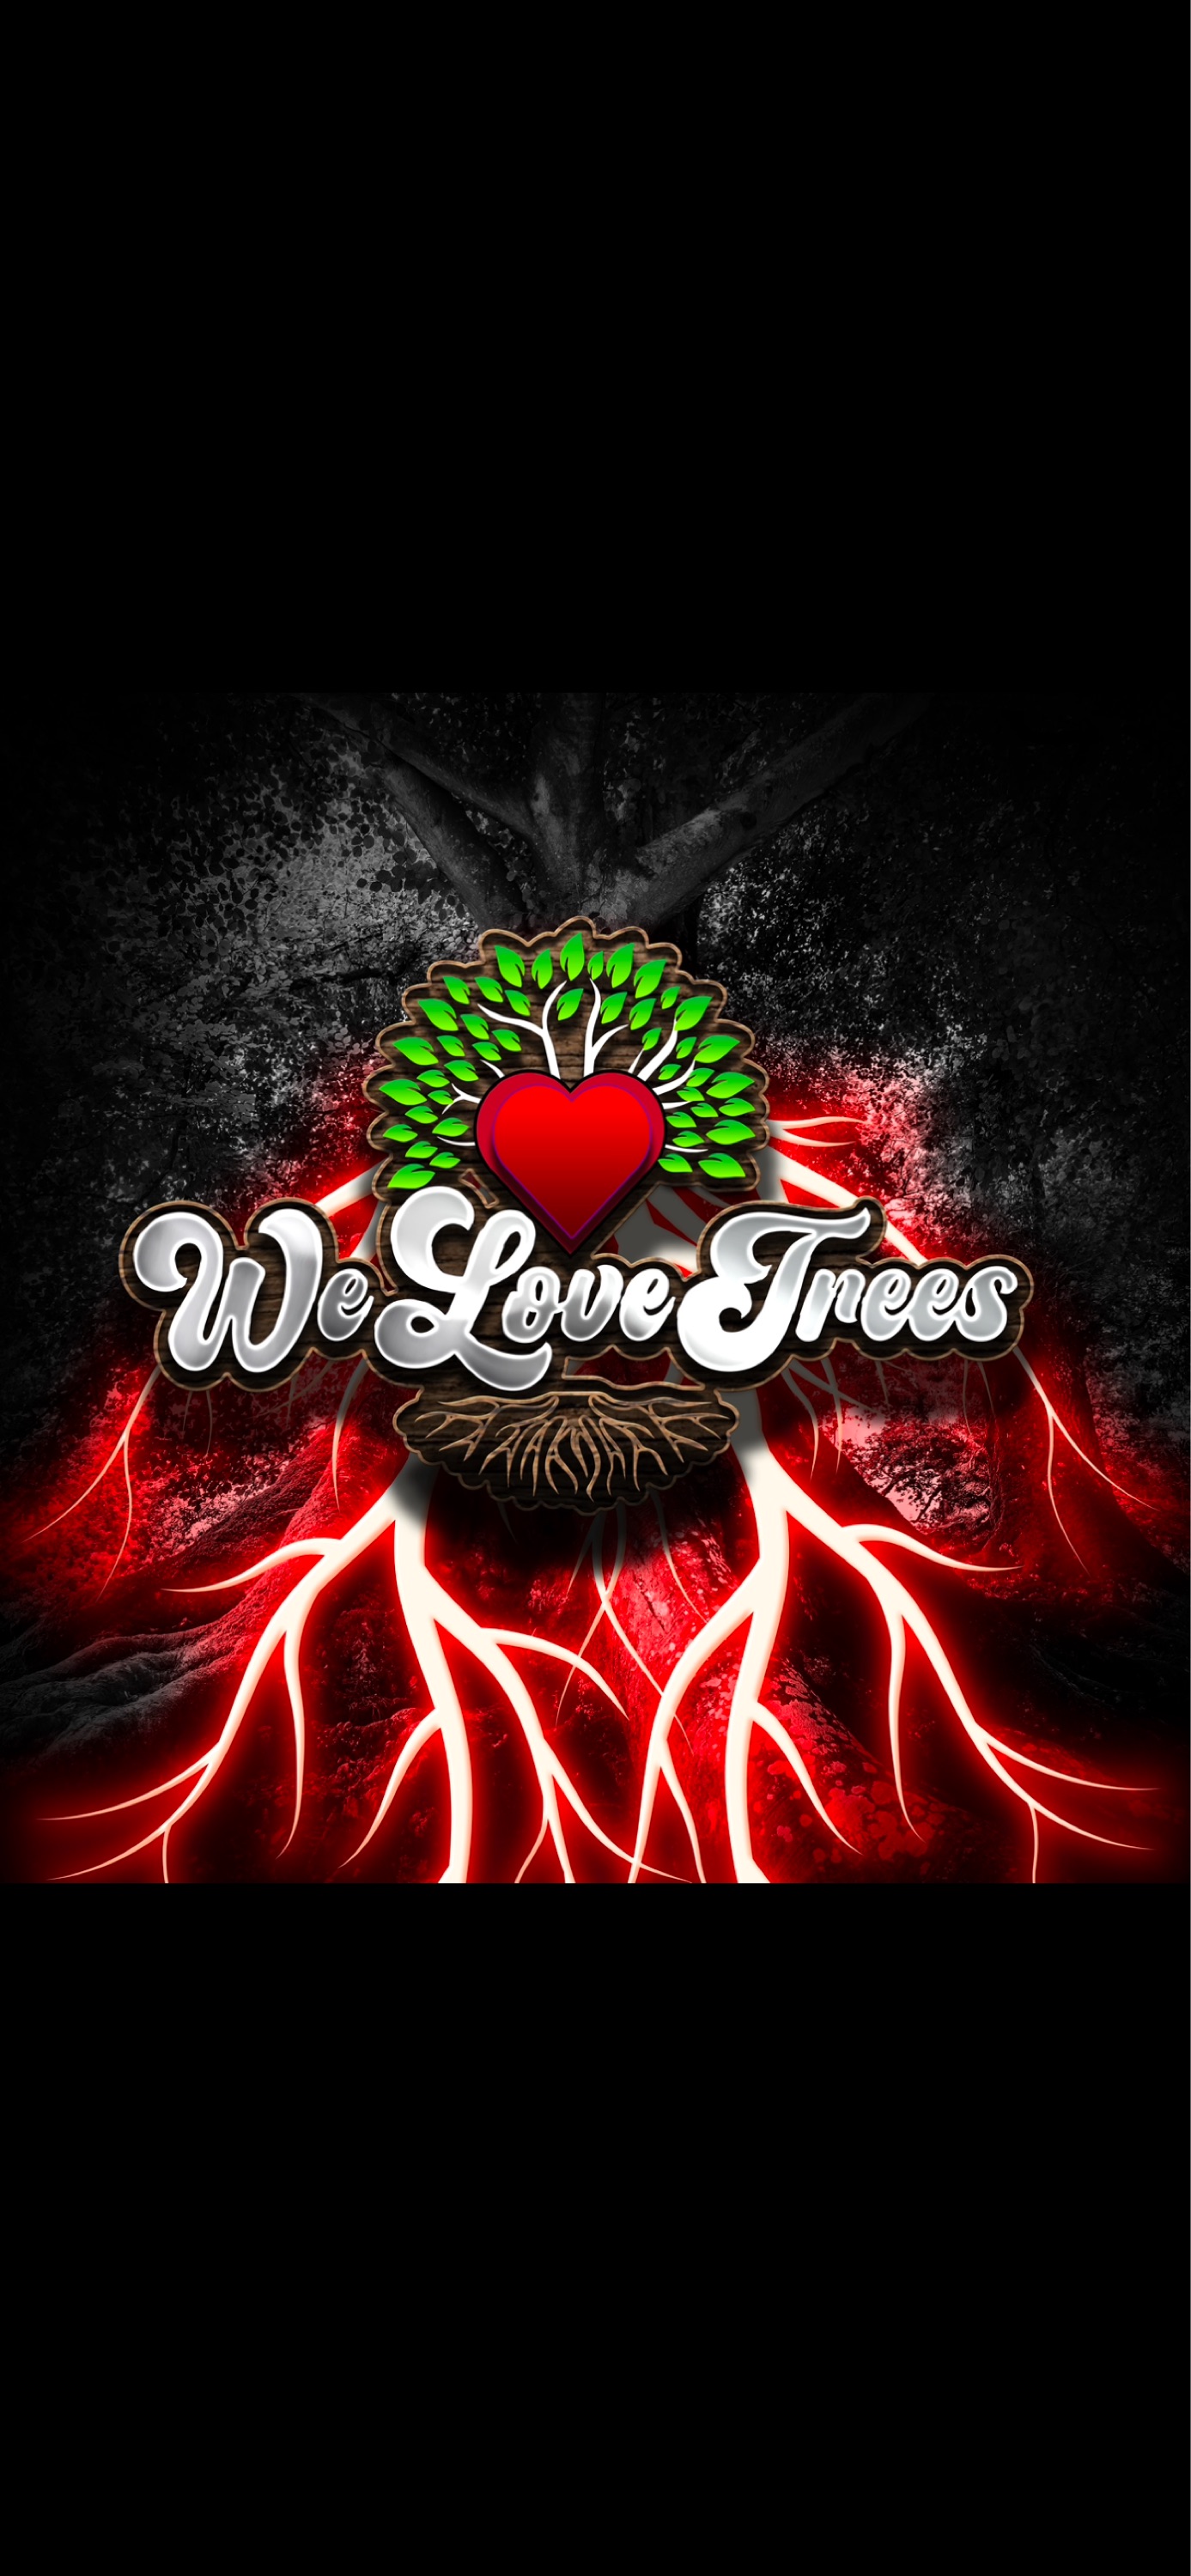 We Love Trees LLC Logo